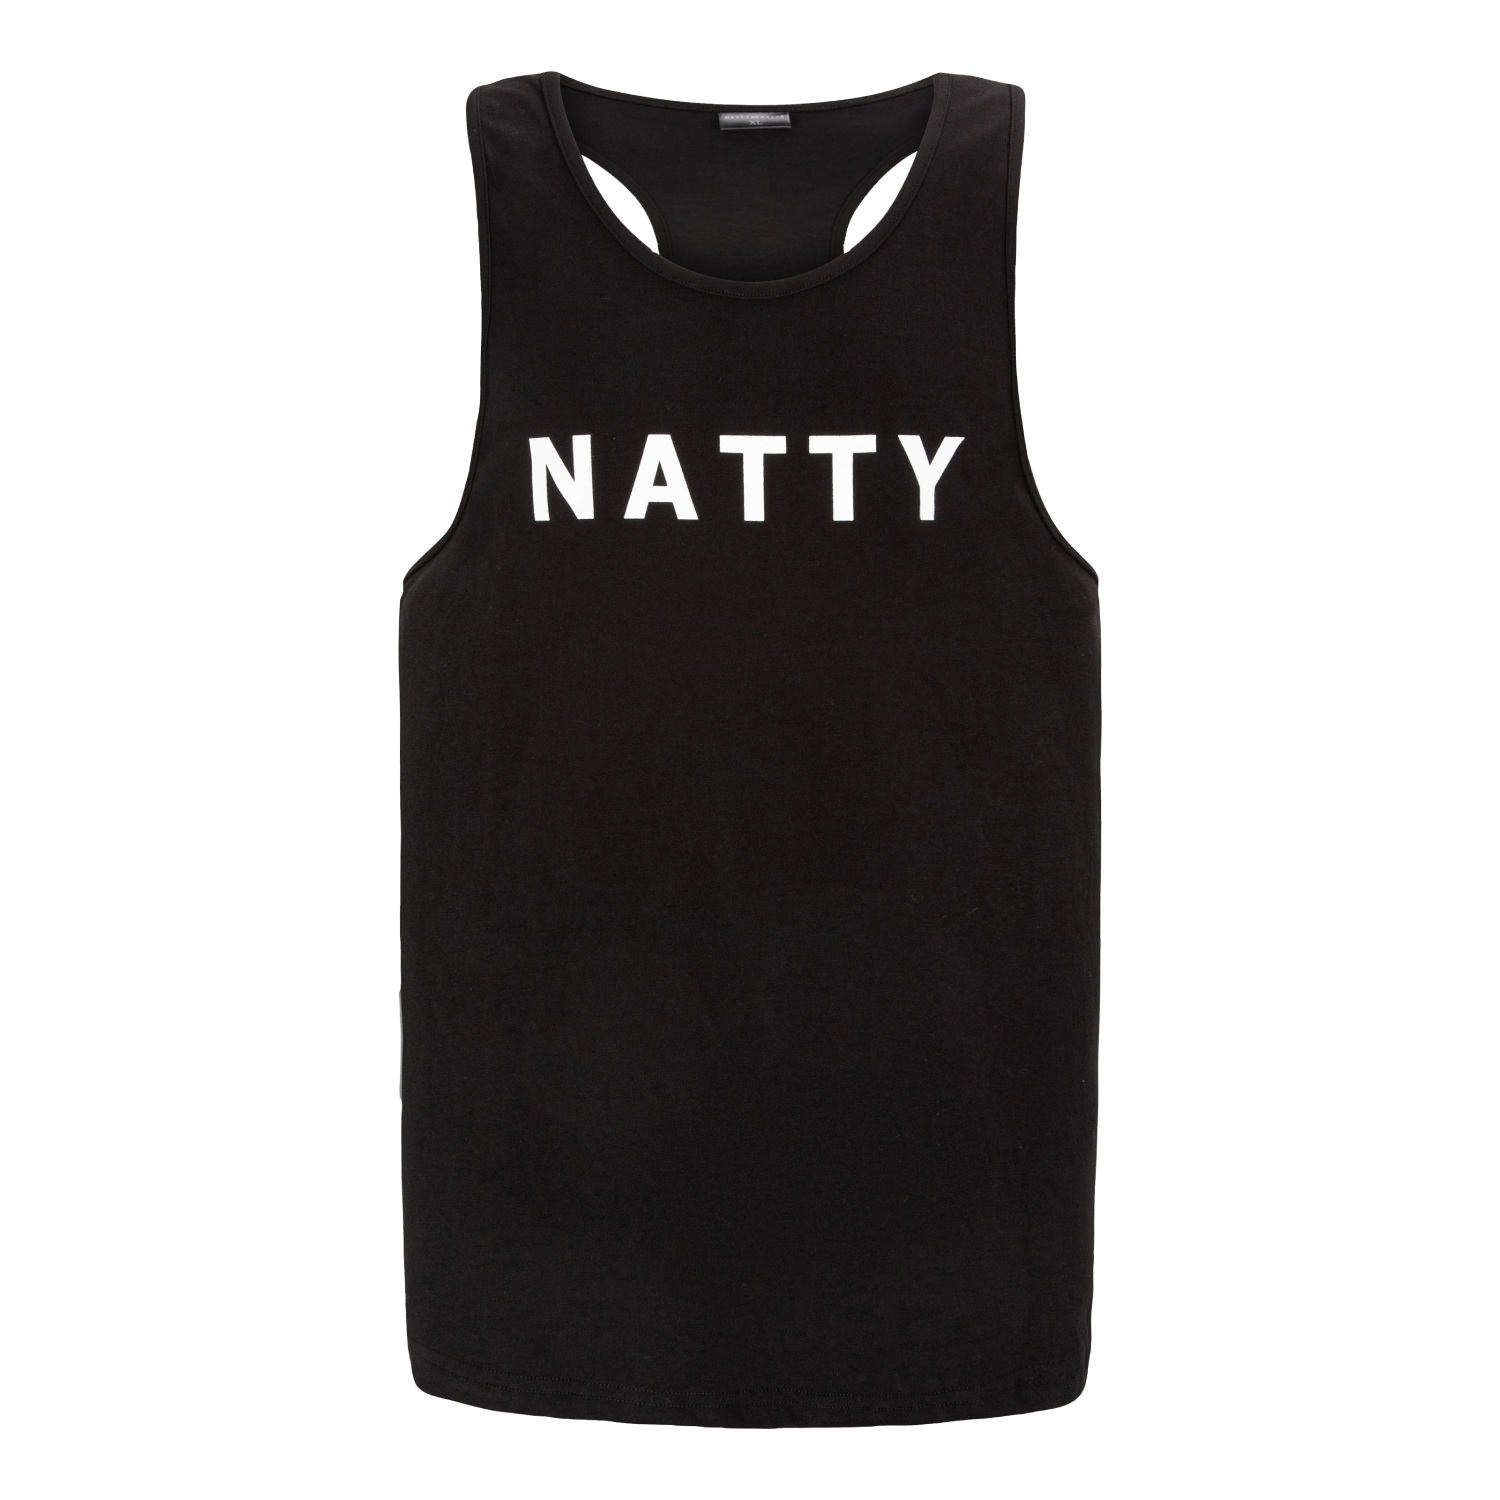 NATTY(네티) ᴄ.ᴍ. 슬리브리스/나시